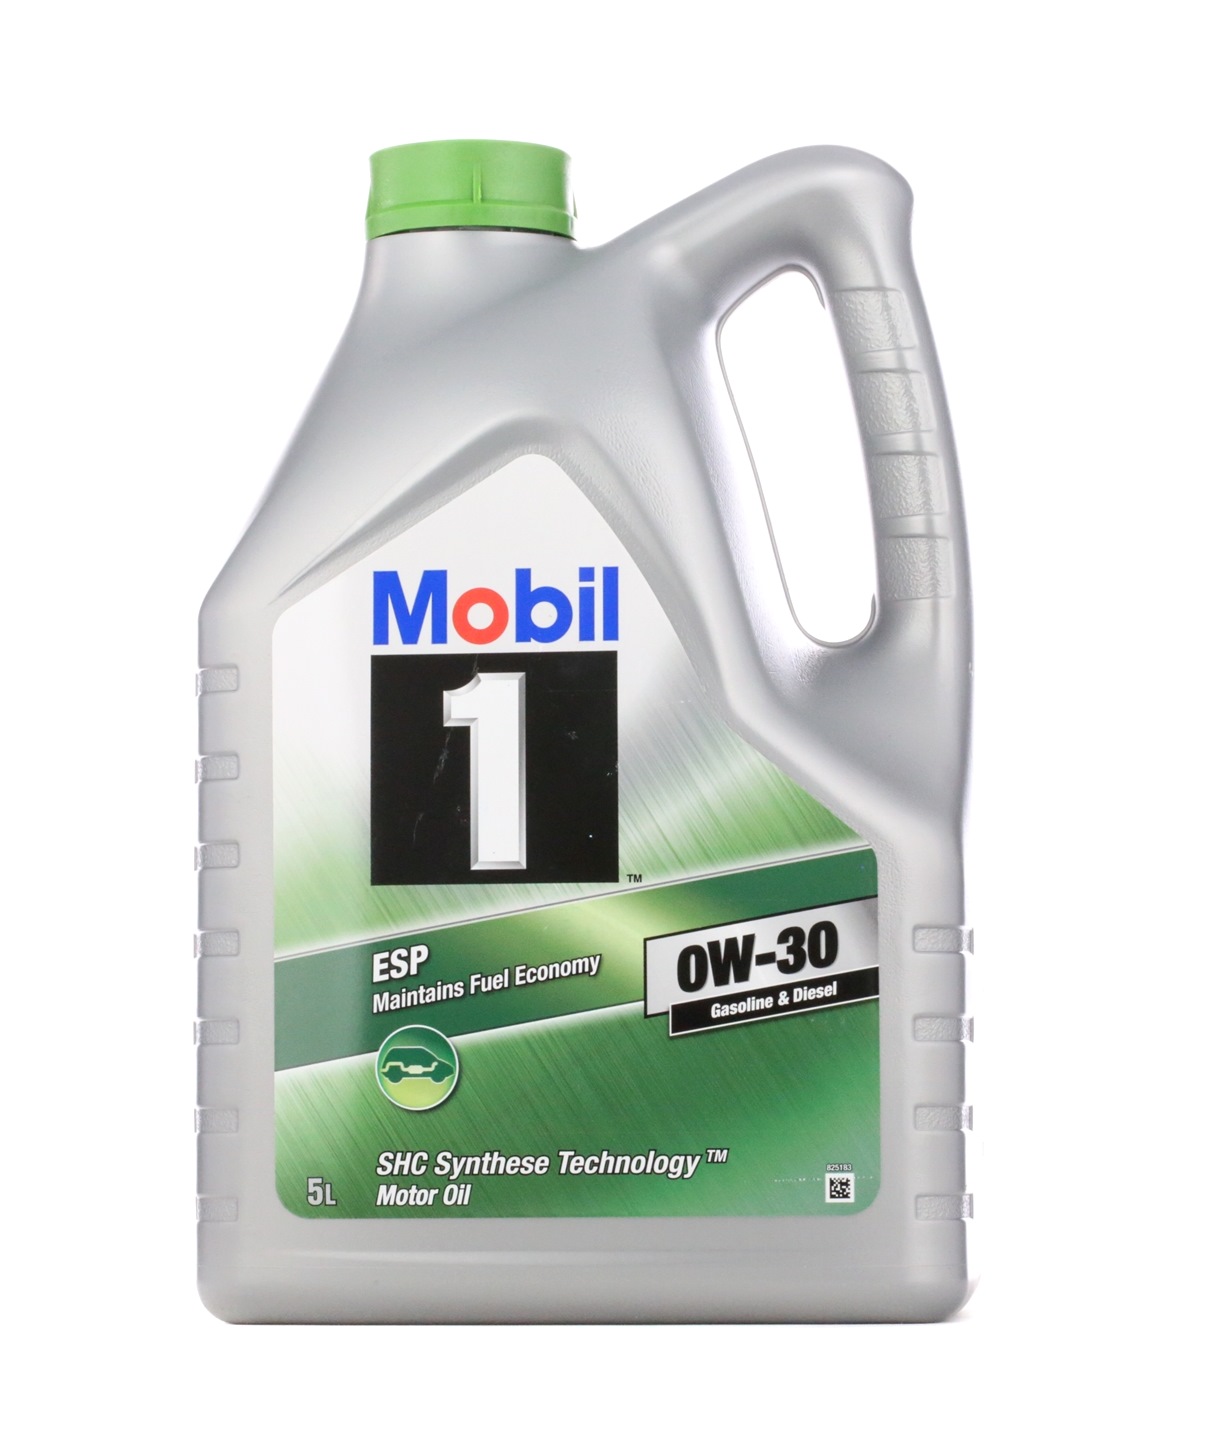 Automobile oil VW 504 00 MOBIL petrol - 153367 1, ESP